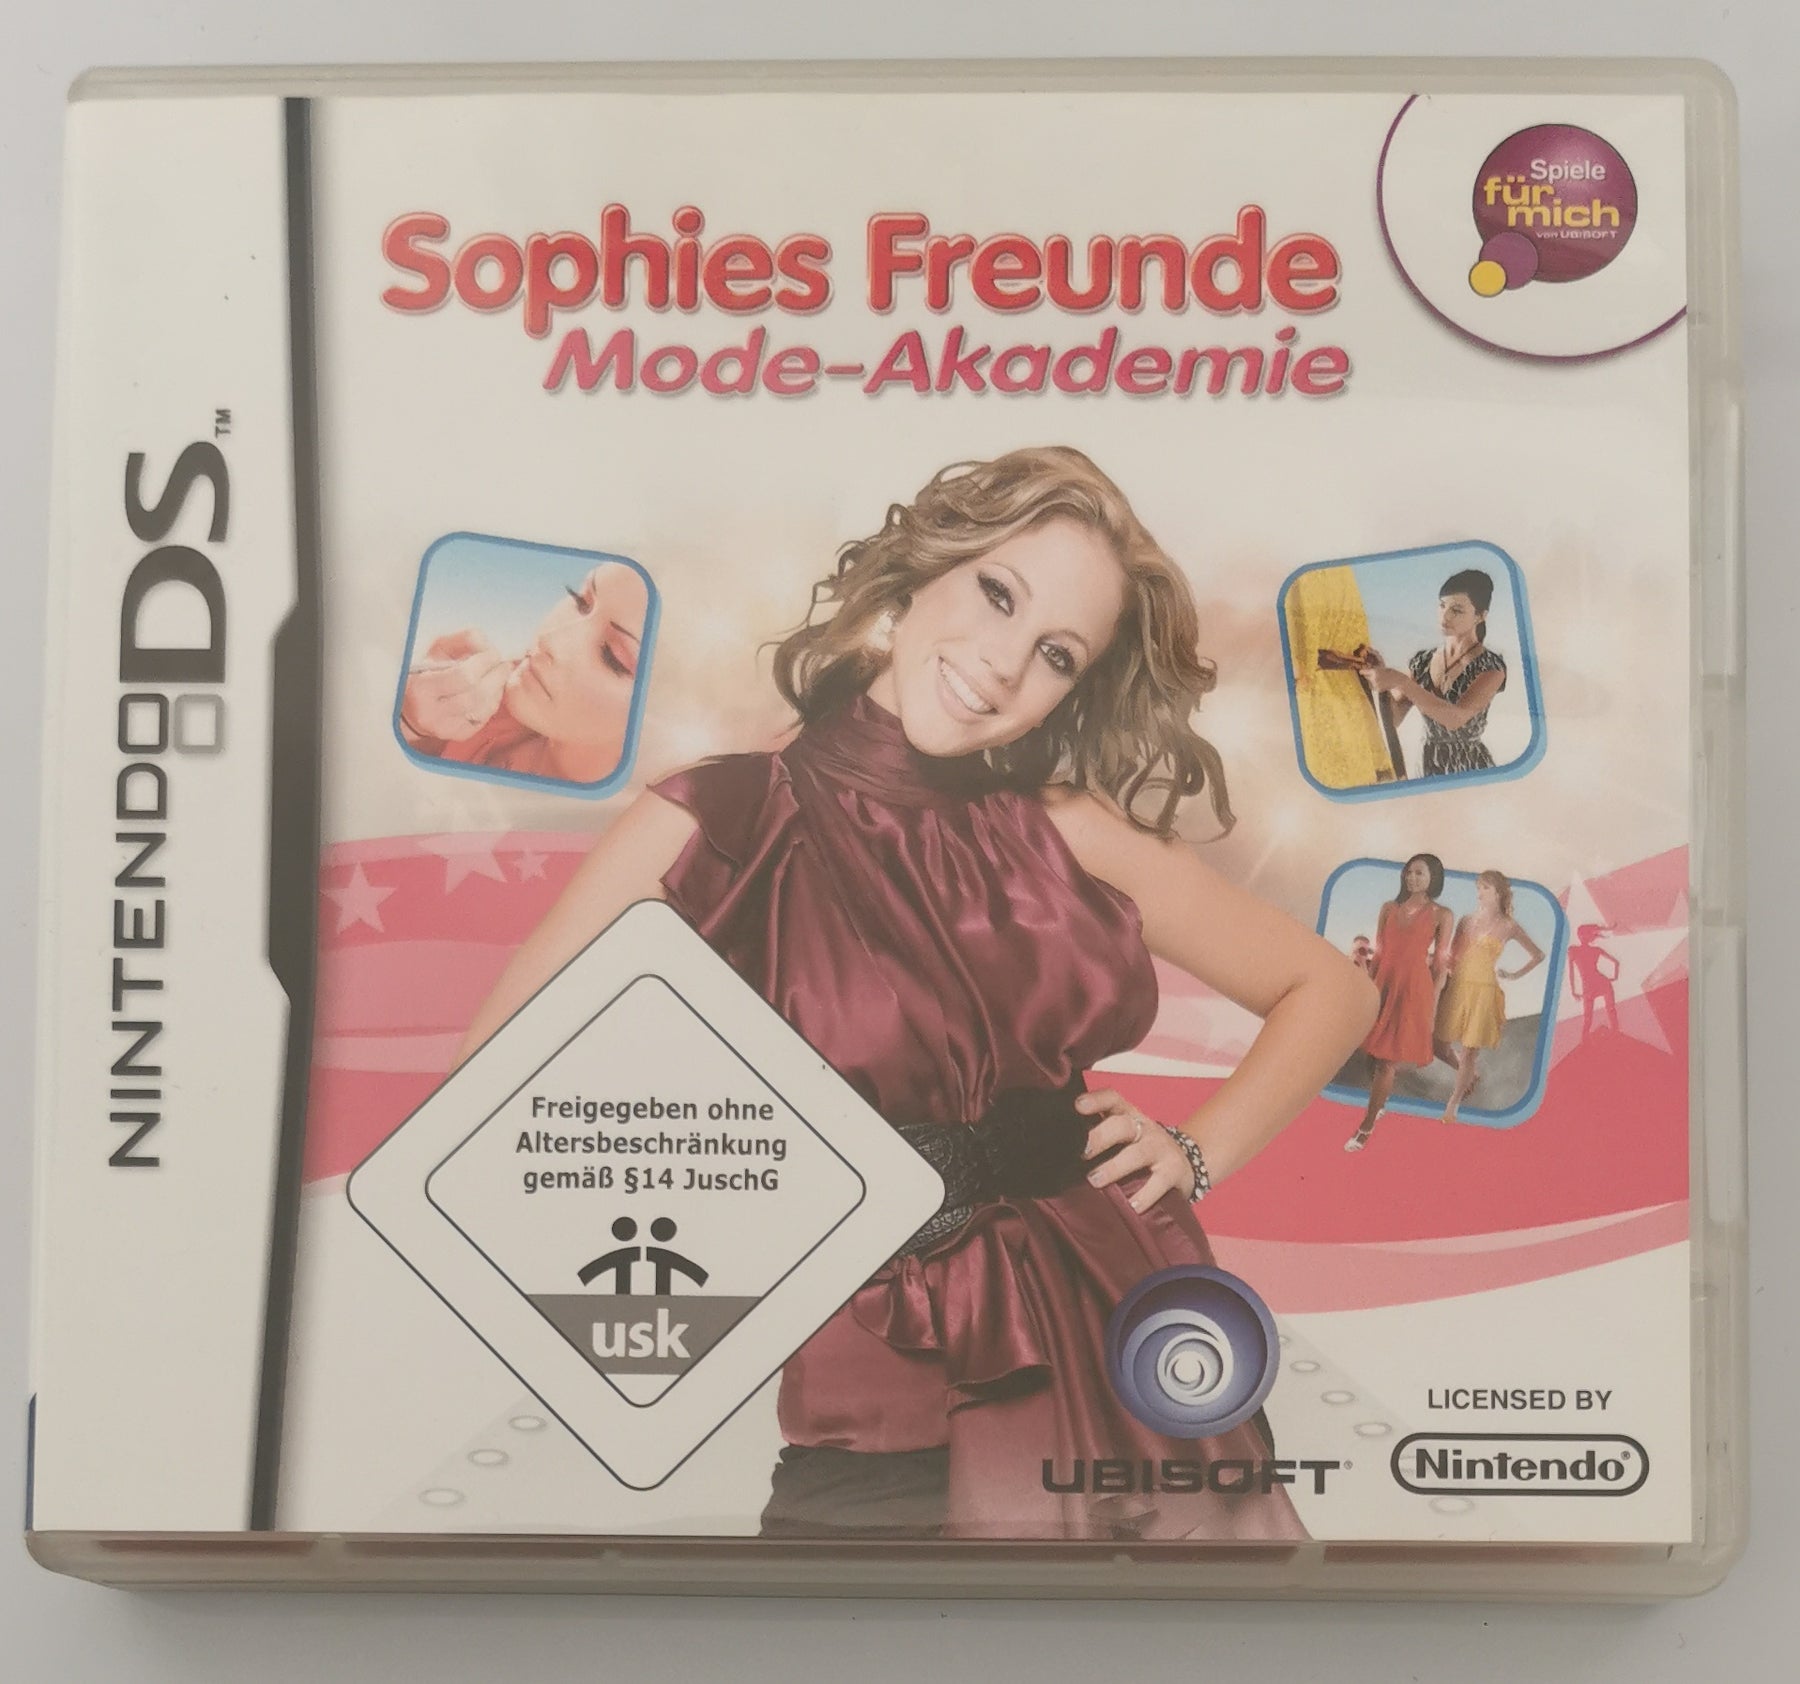 Sophies Freunde ModeAkademie Software Pyramide (Nintendo DS) [Sehr Gut]